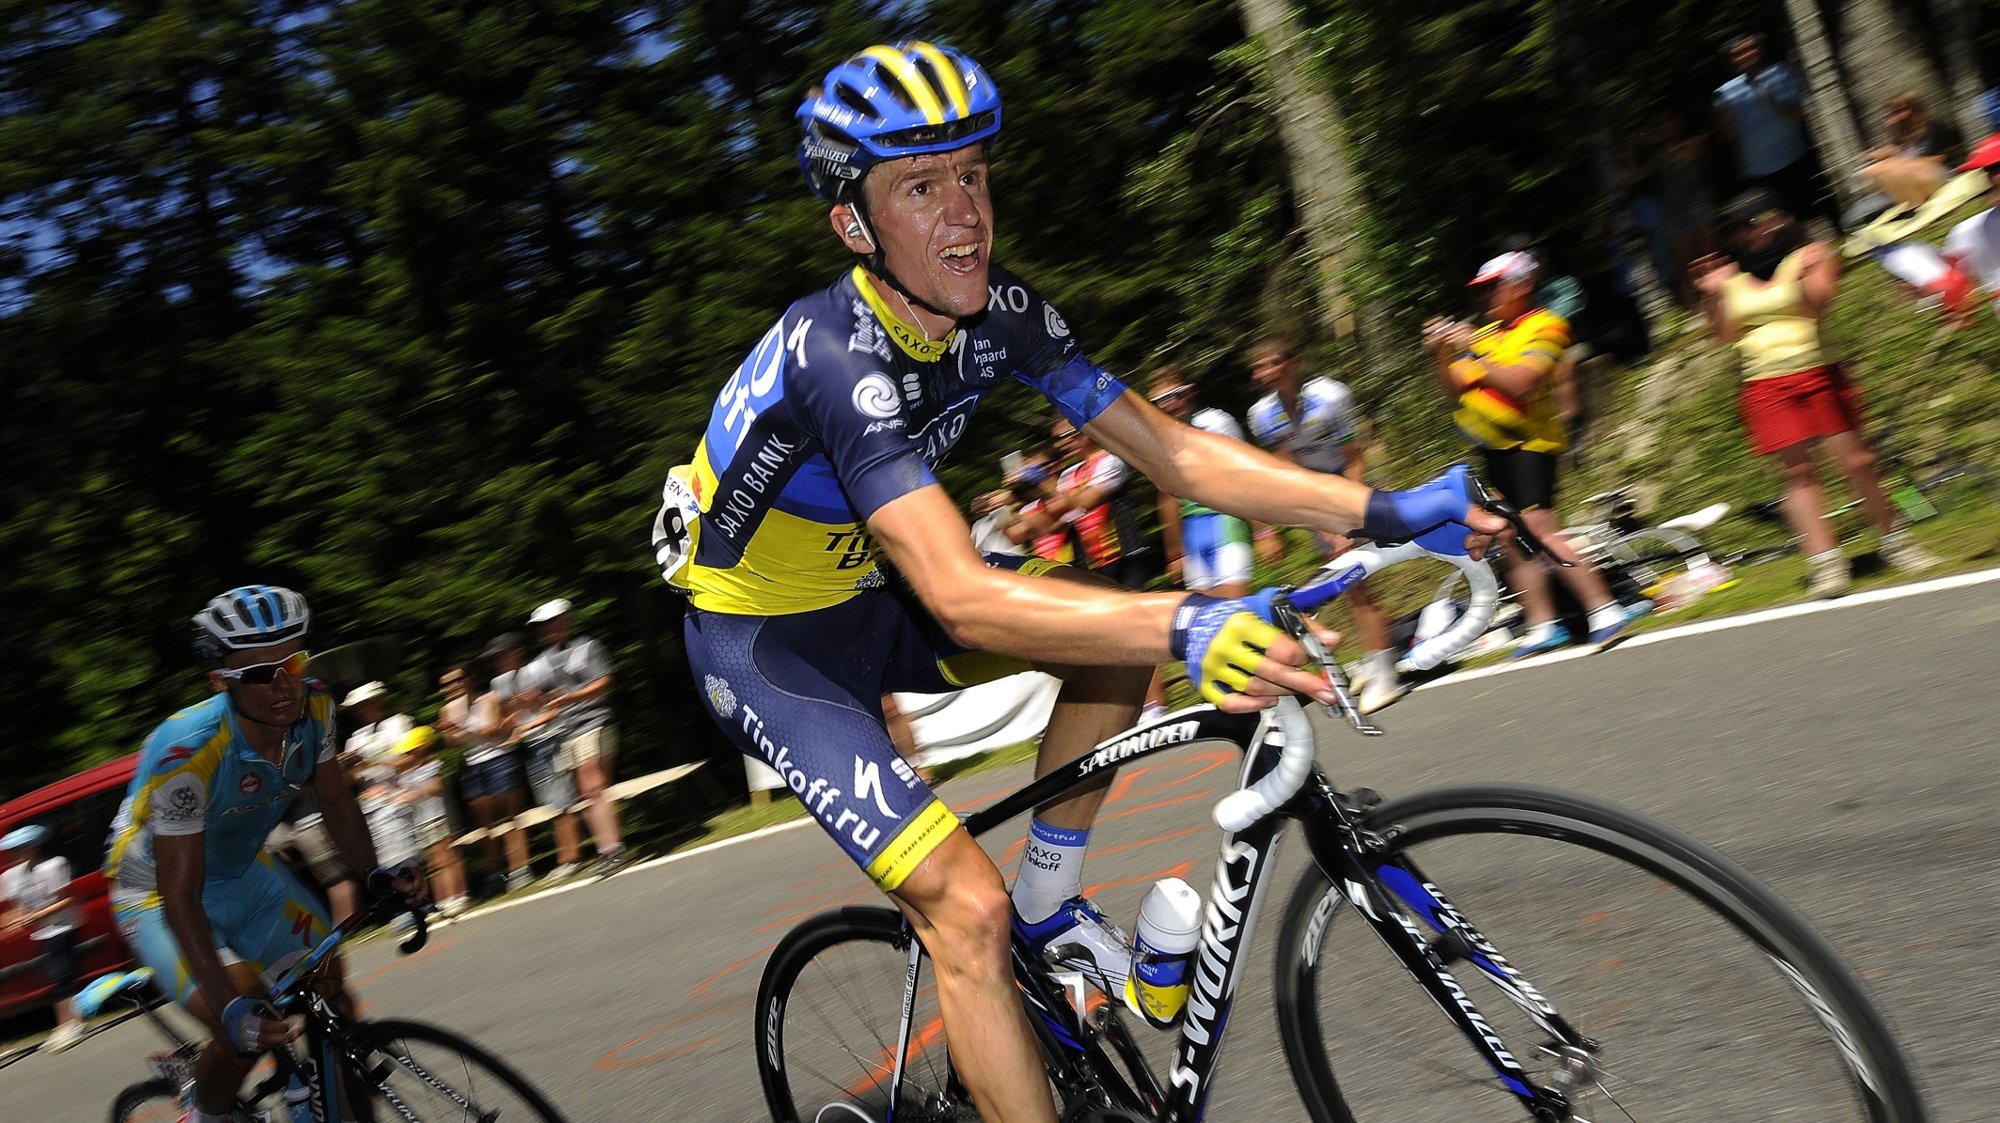 Chris Anker Sorensen, Death |  Former cycling star Chris Anker Sorensen died in a bicycle accident